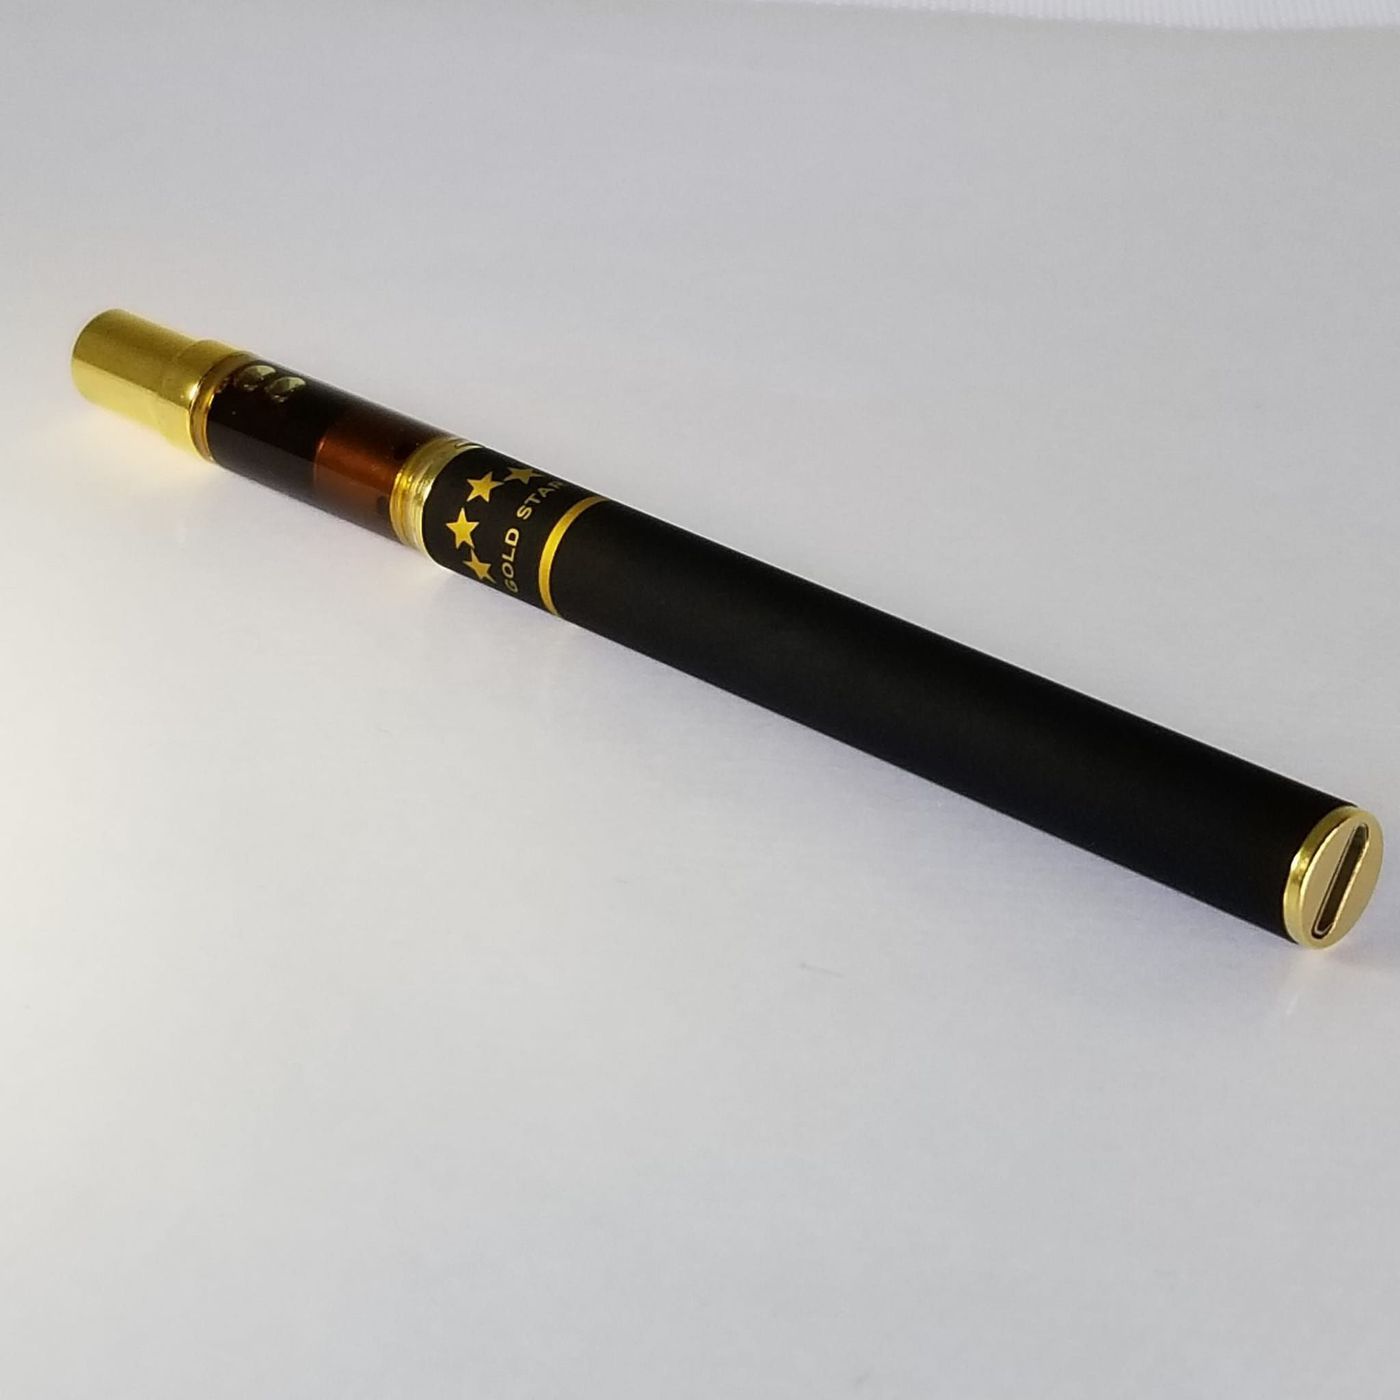 Gold Star Rosin - Disposable Vape Pen - MK Ultra Forbidden Fruit 0.35g